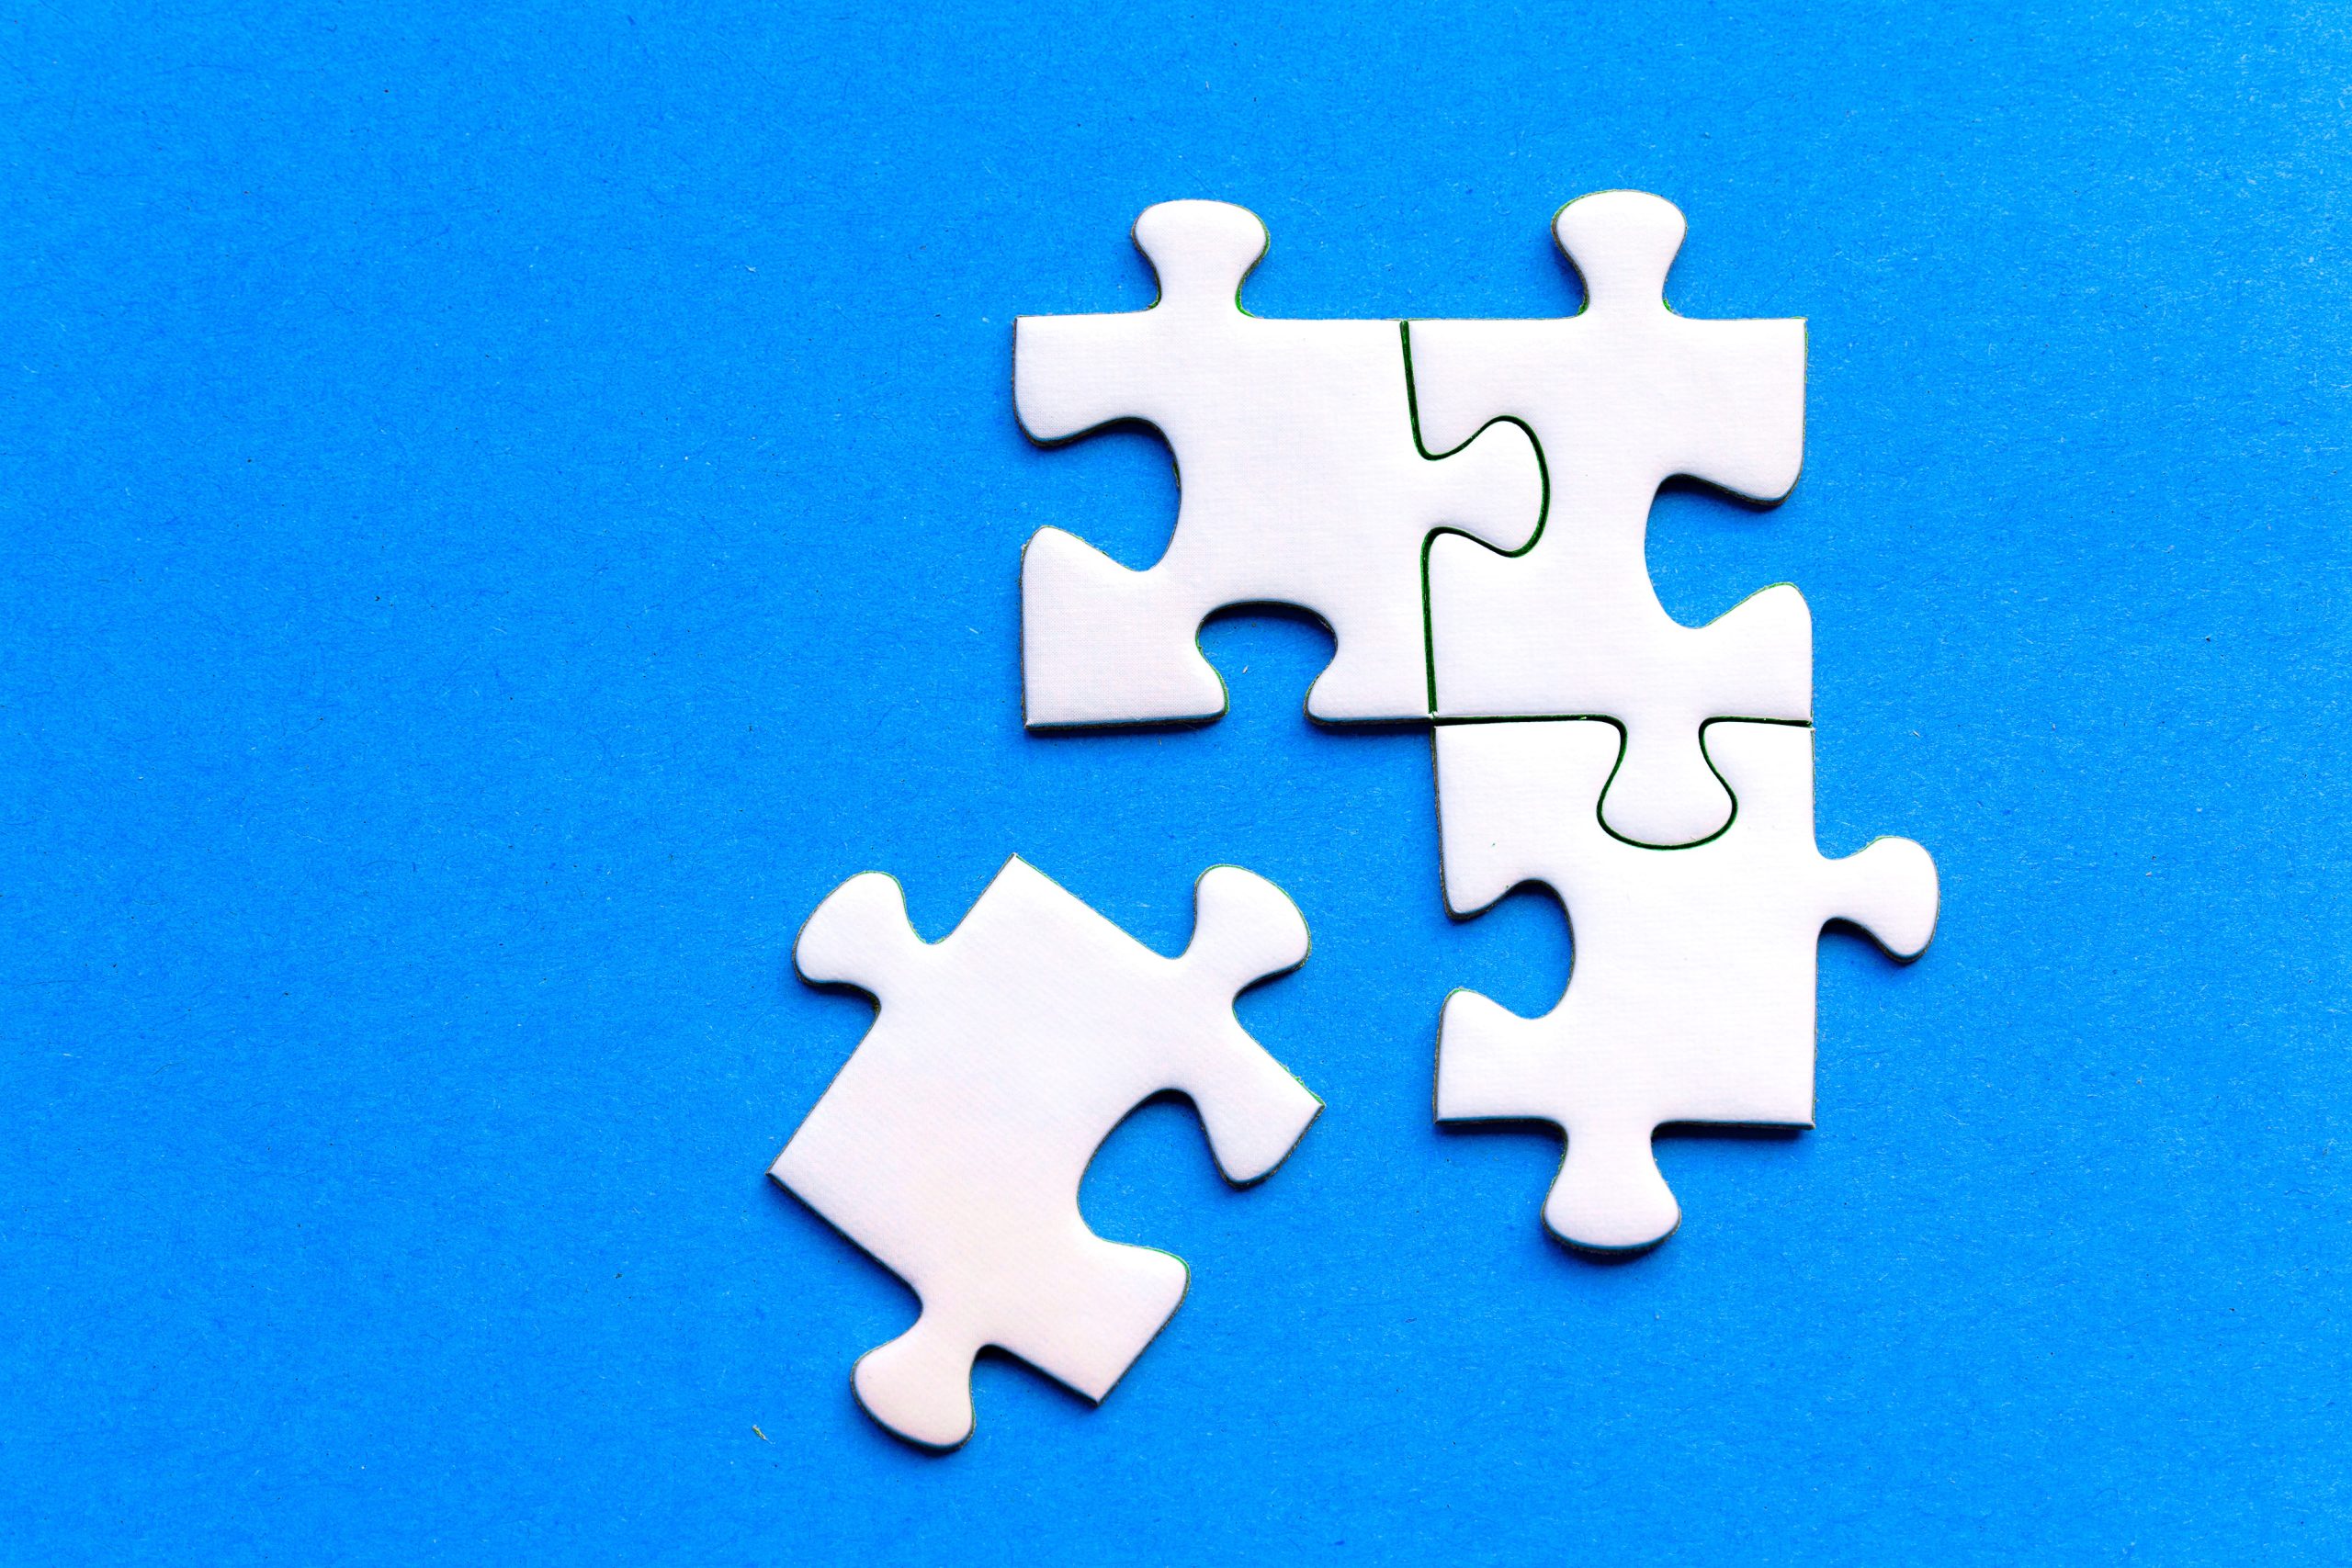 White puzzle pieces against a blue background.